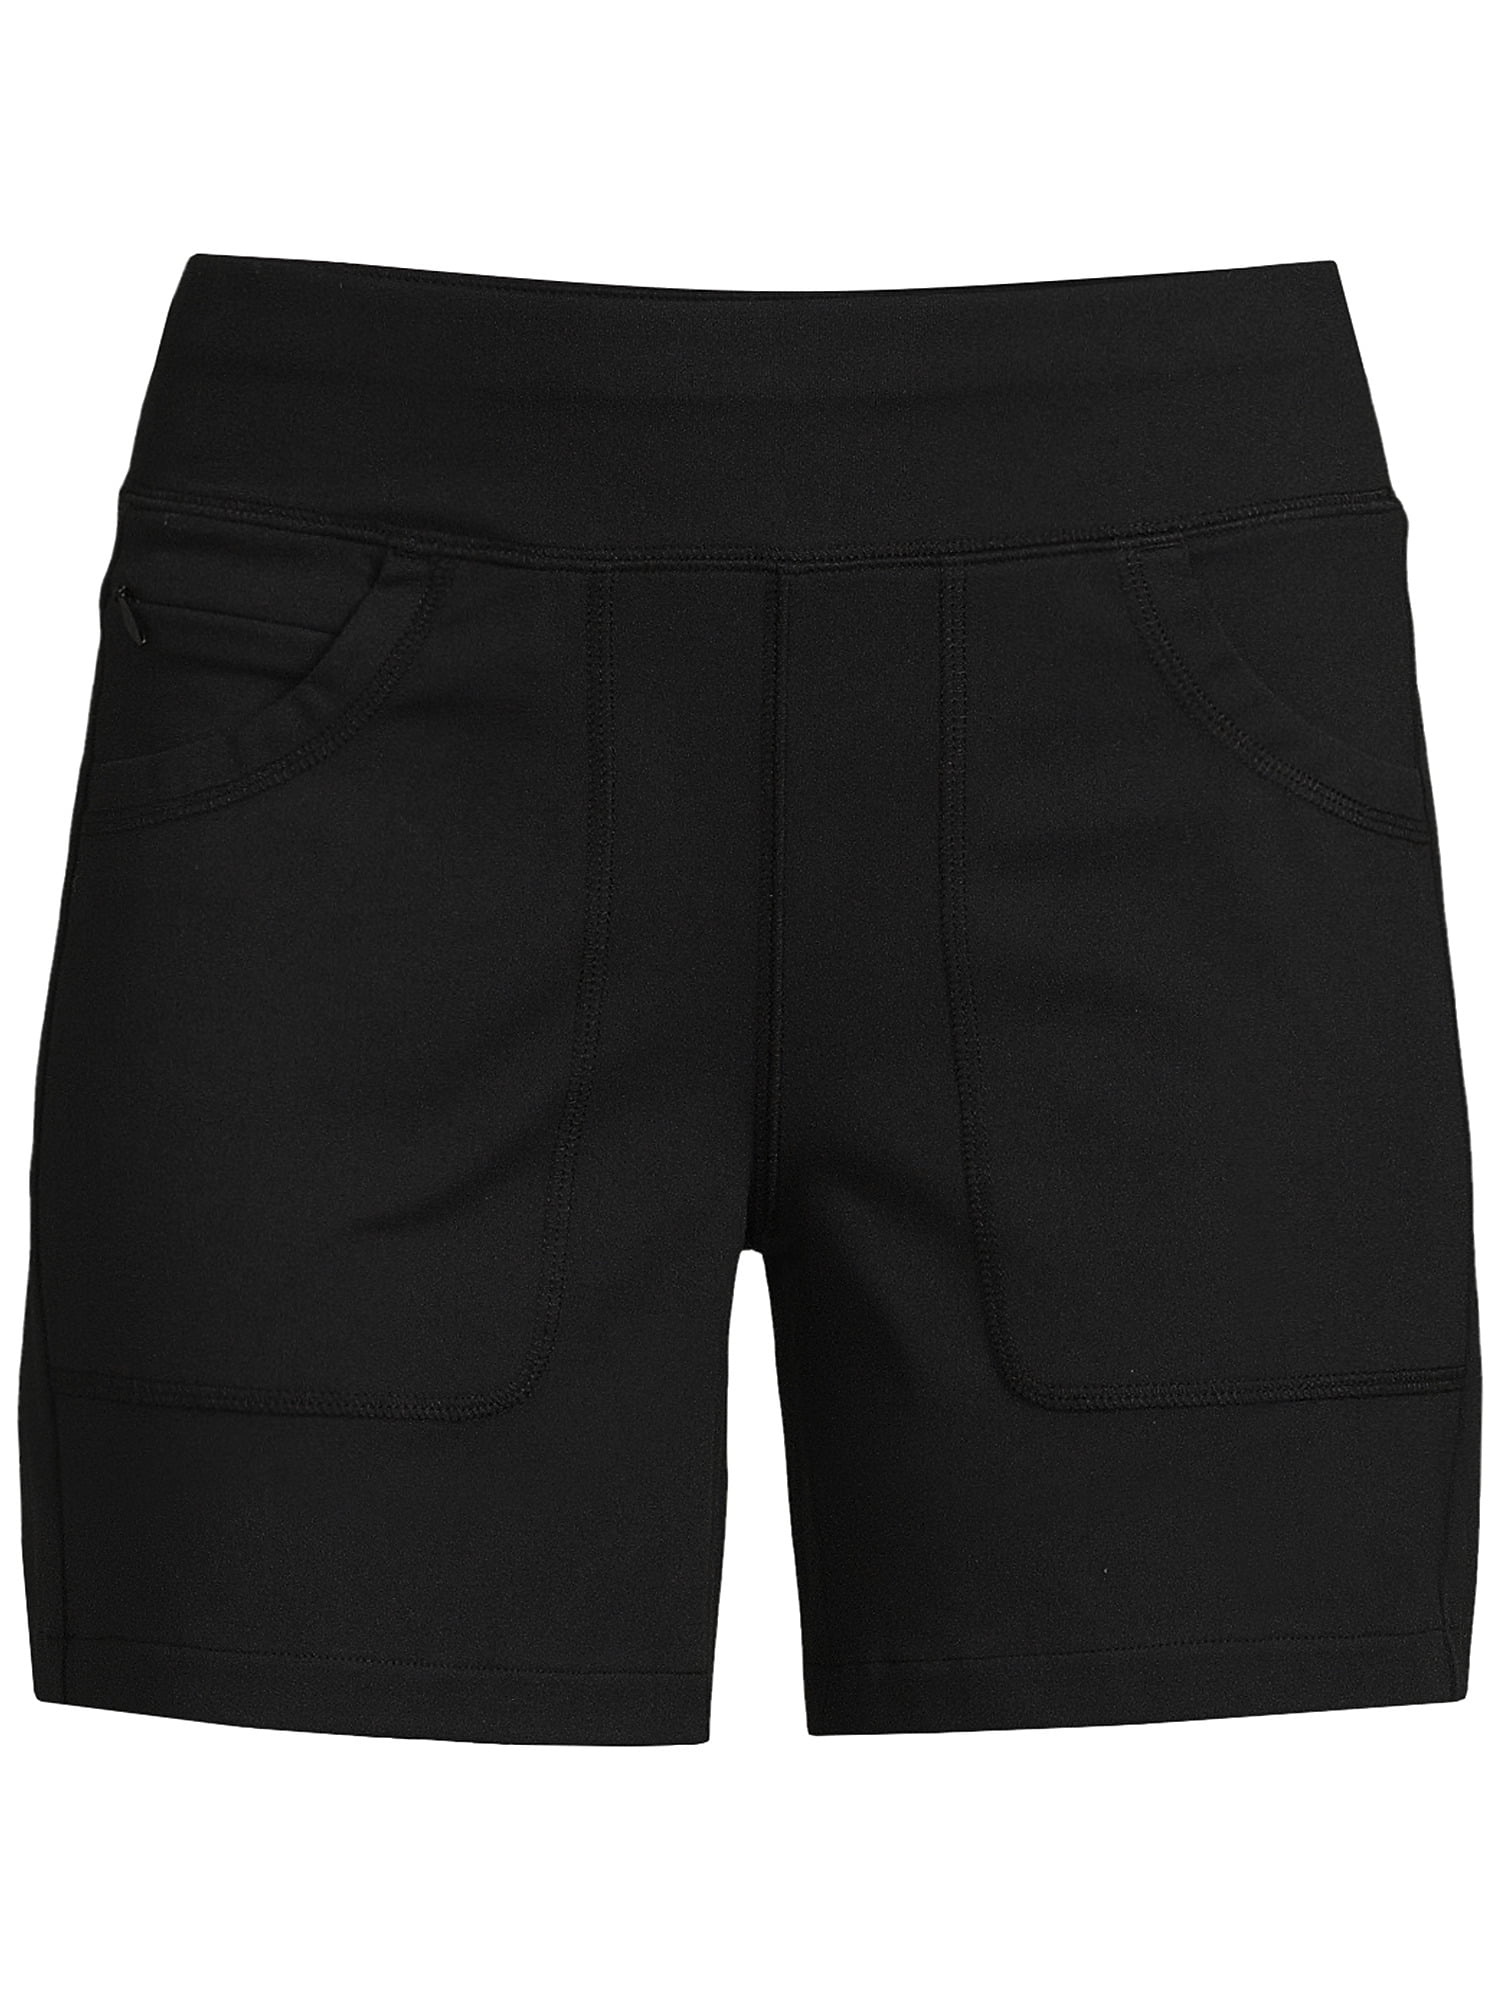 Women's Active 5 Pocket Shorts